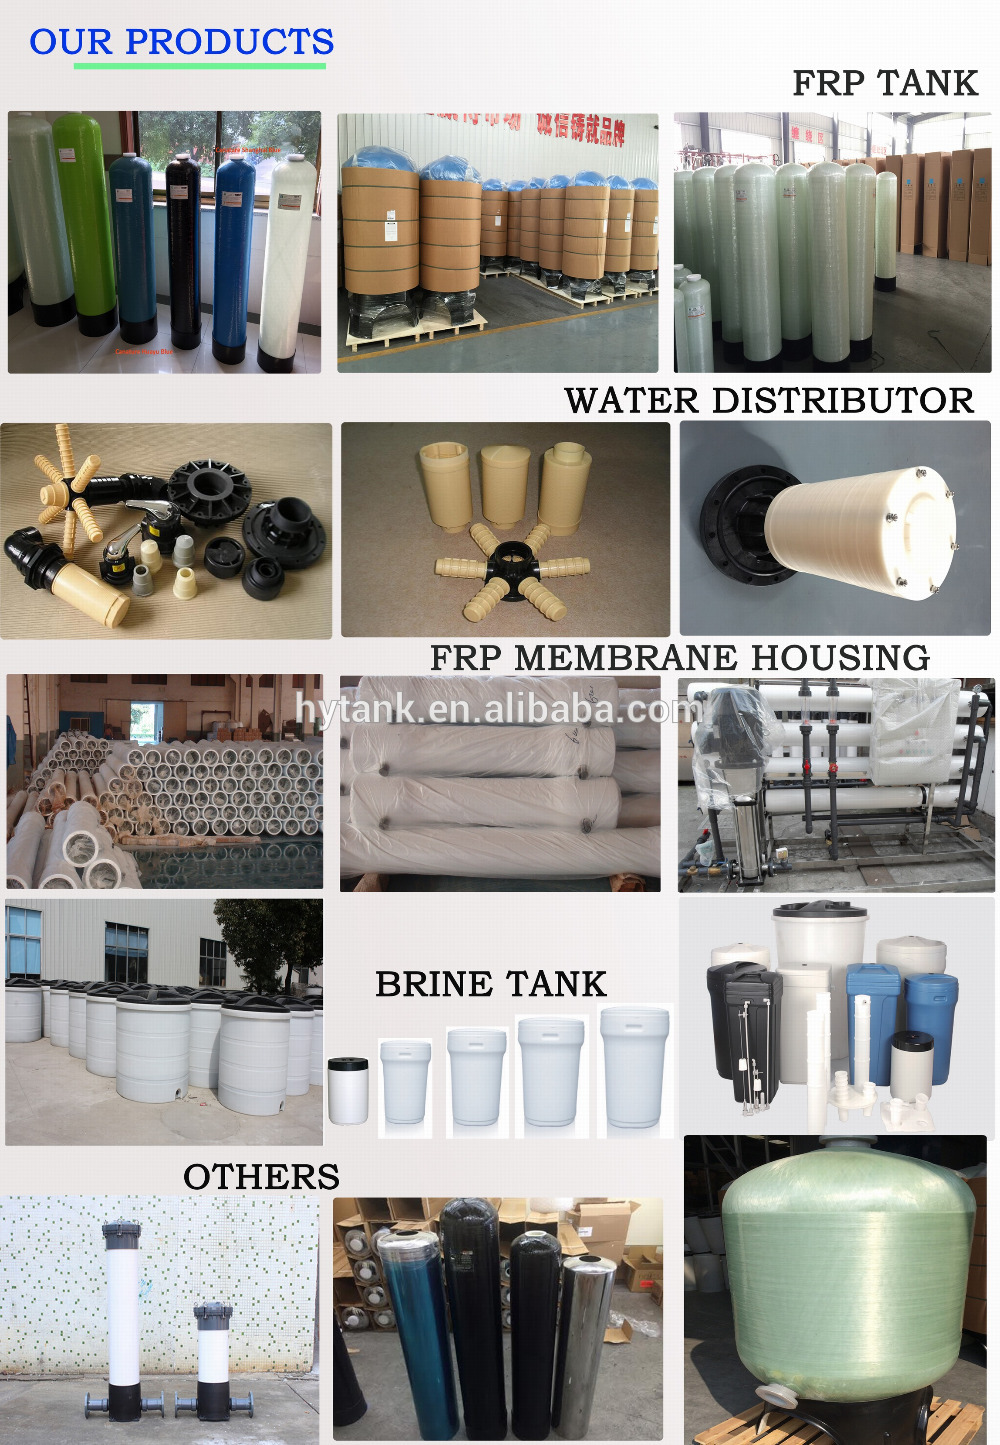 Water distributor for filter tanks